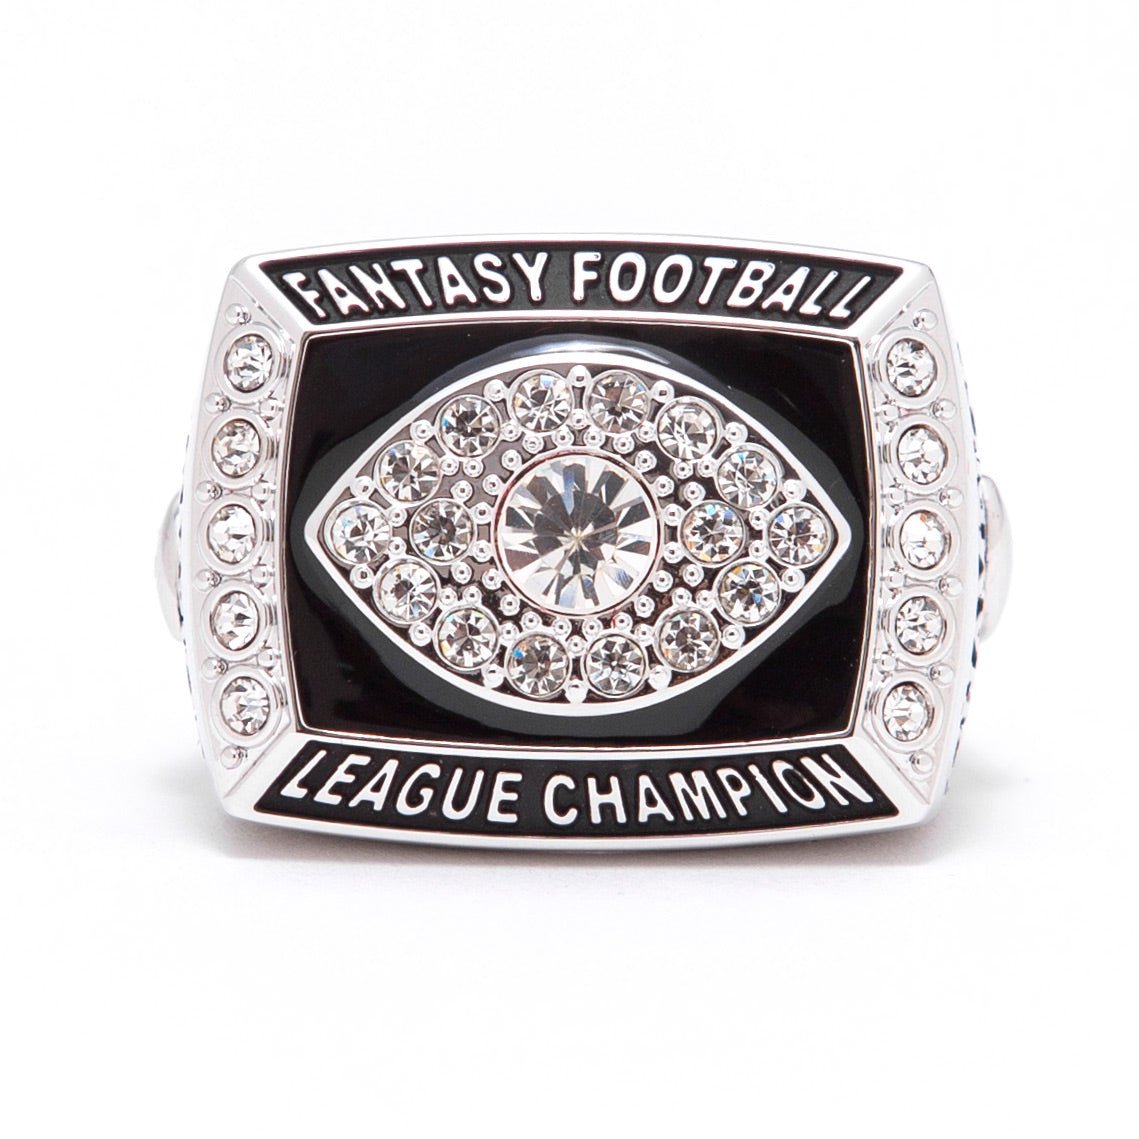 "The Ringer" Fantasy Football Championship Ring